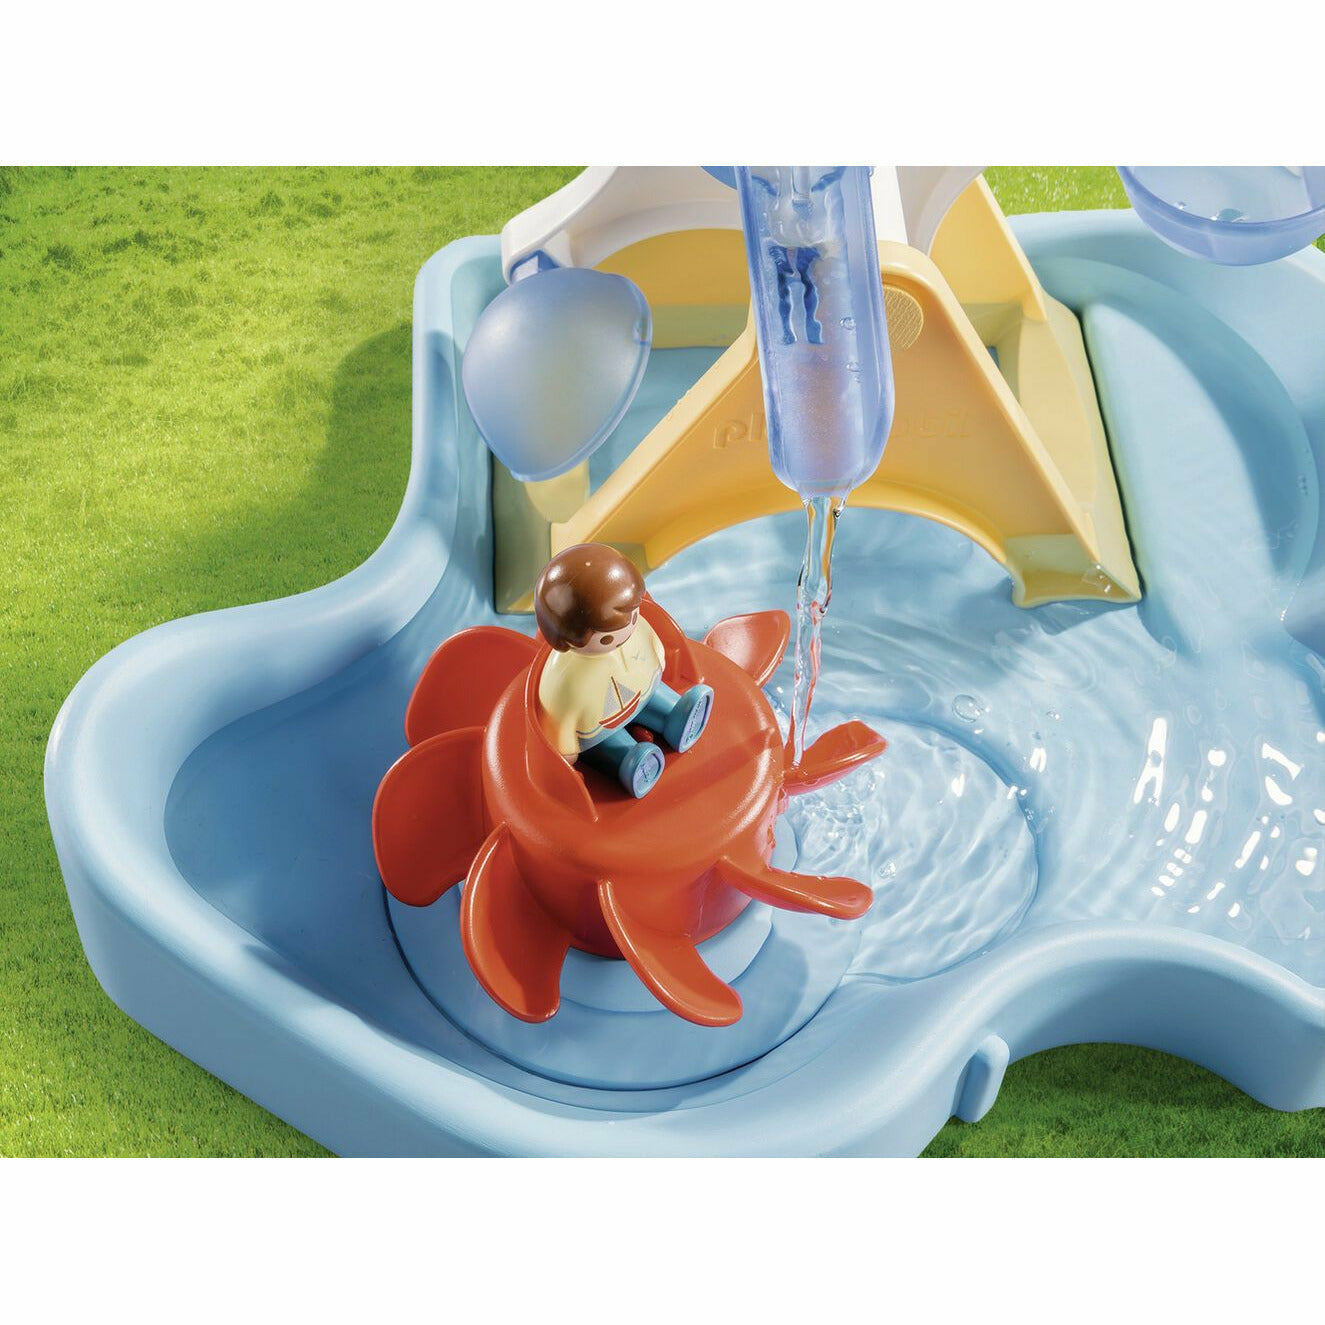 AQUA Water Wheel Carousel-Toy Playsets-Playmobil-Yes Bebe